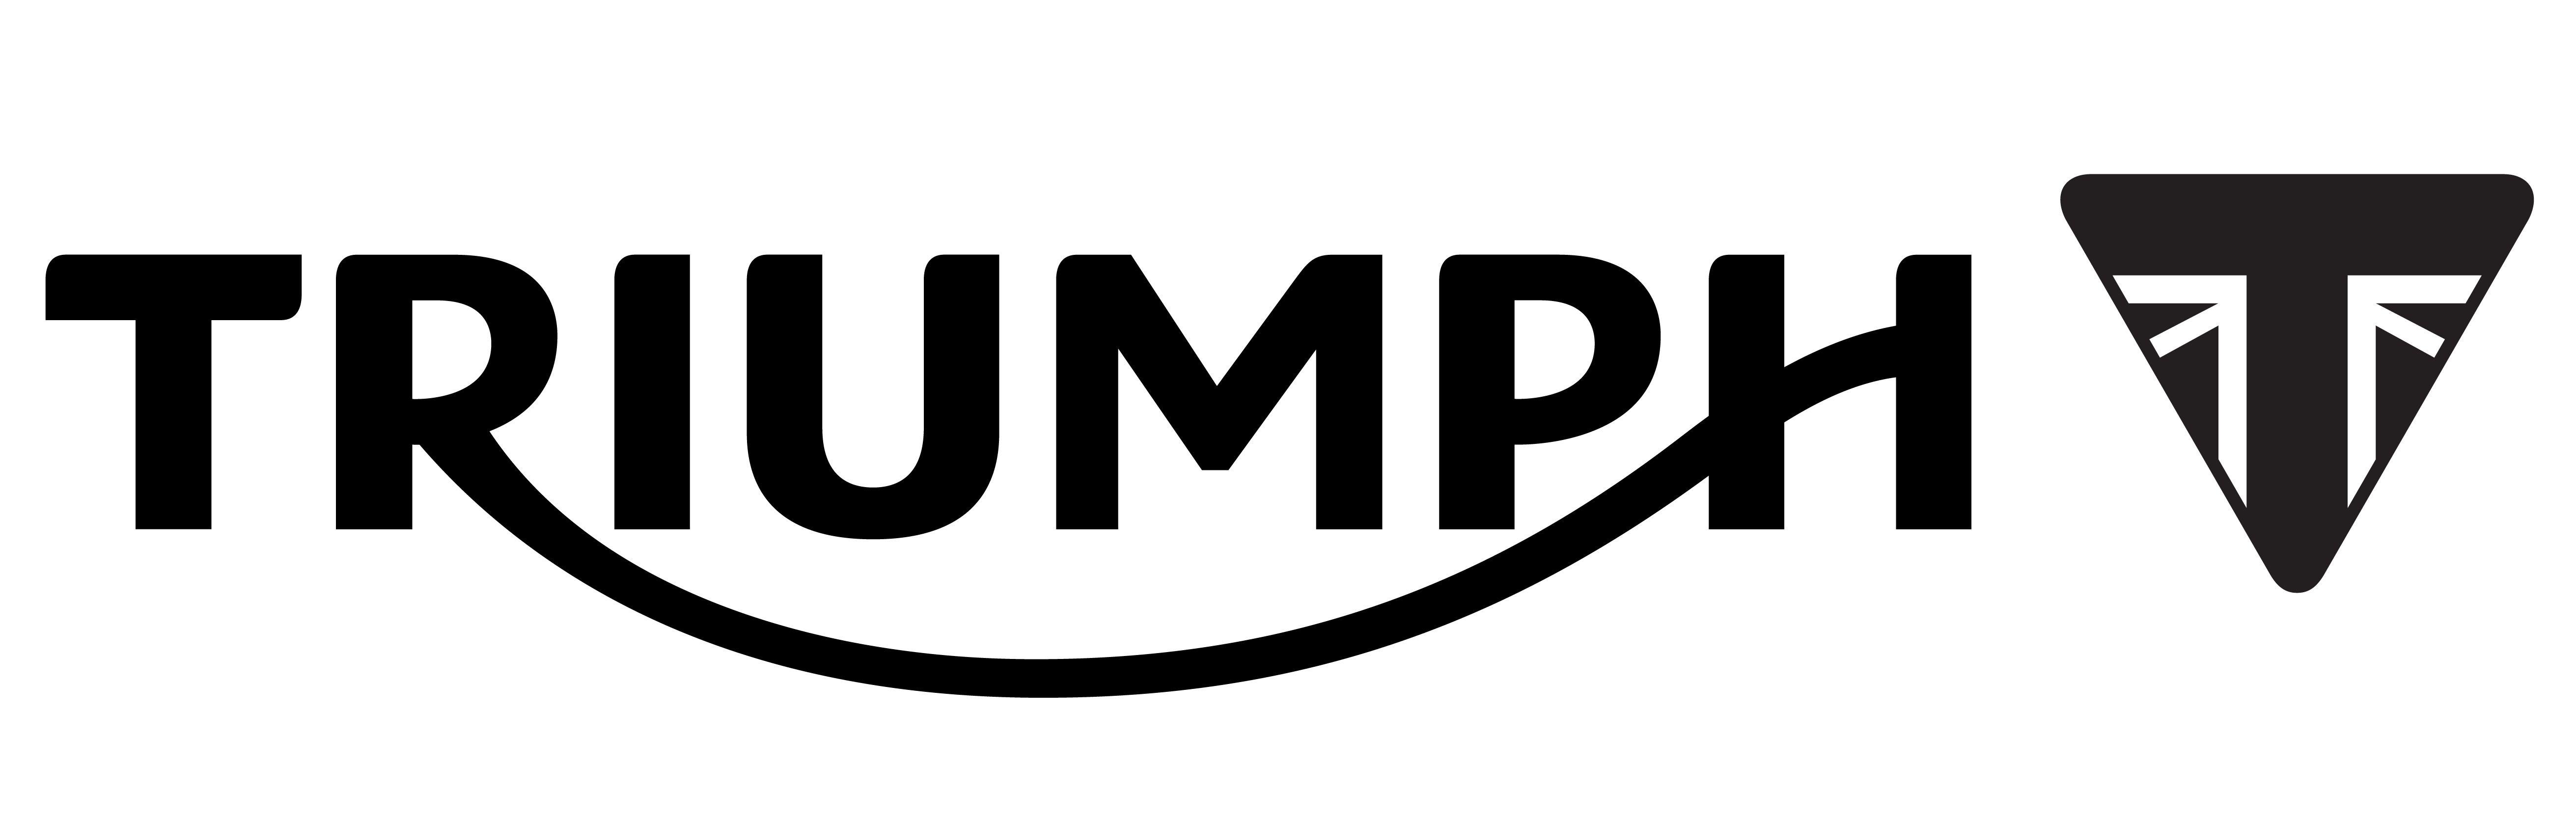 2013 Logo - Triumph logo: history, evolution, meaning